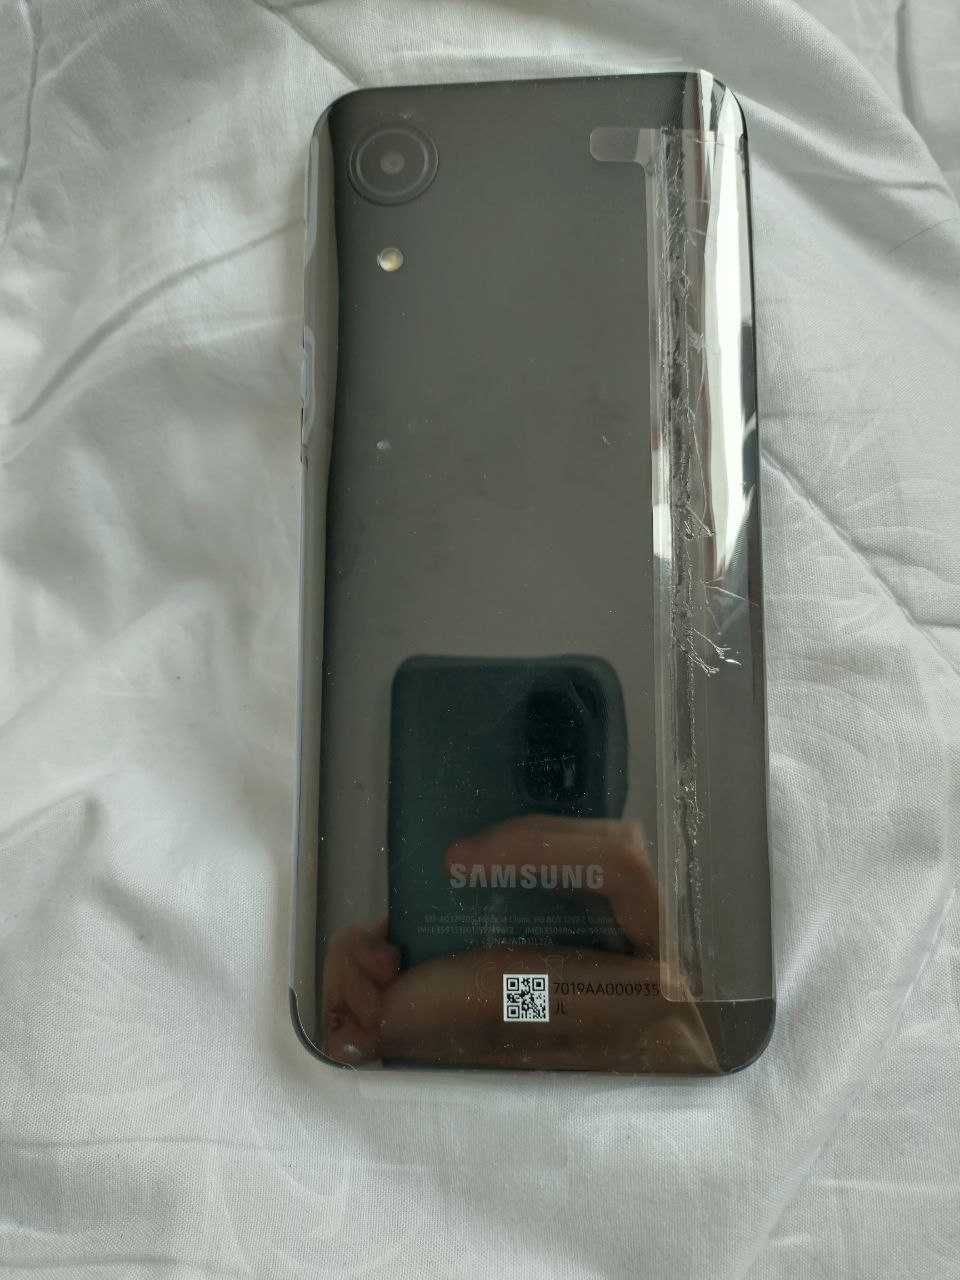 Samsung Galaxy A03 Core 2/32GB